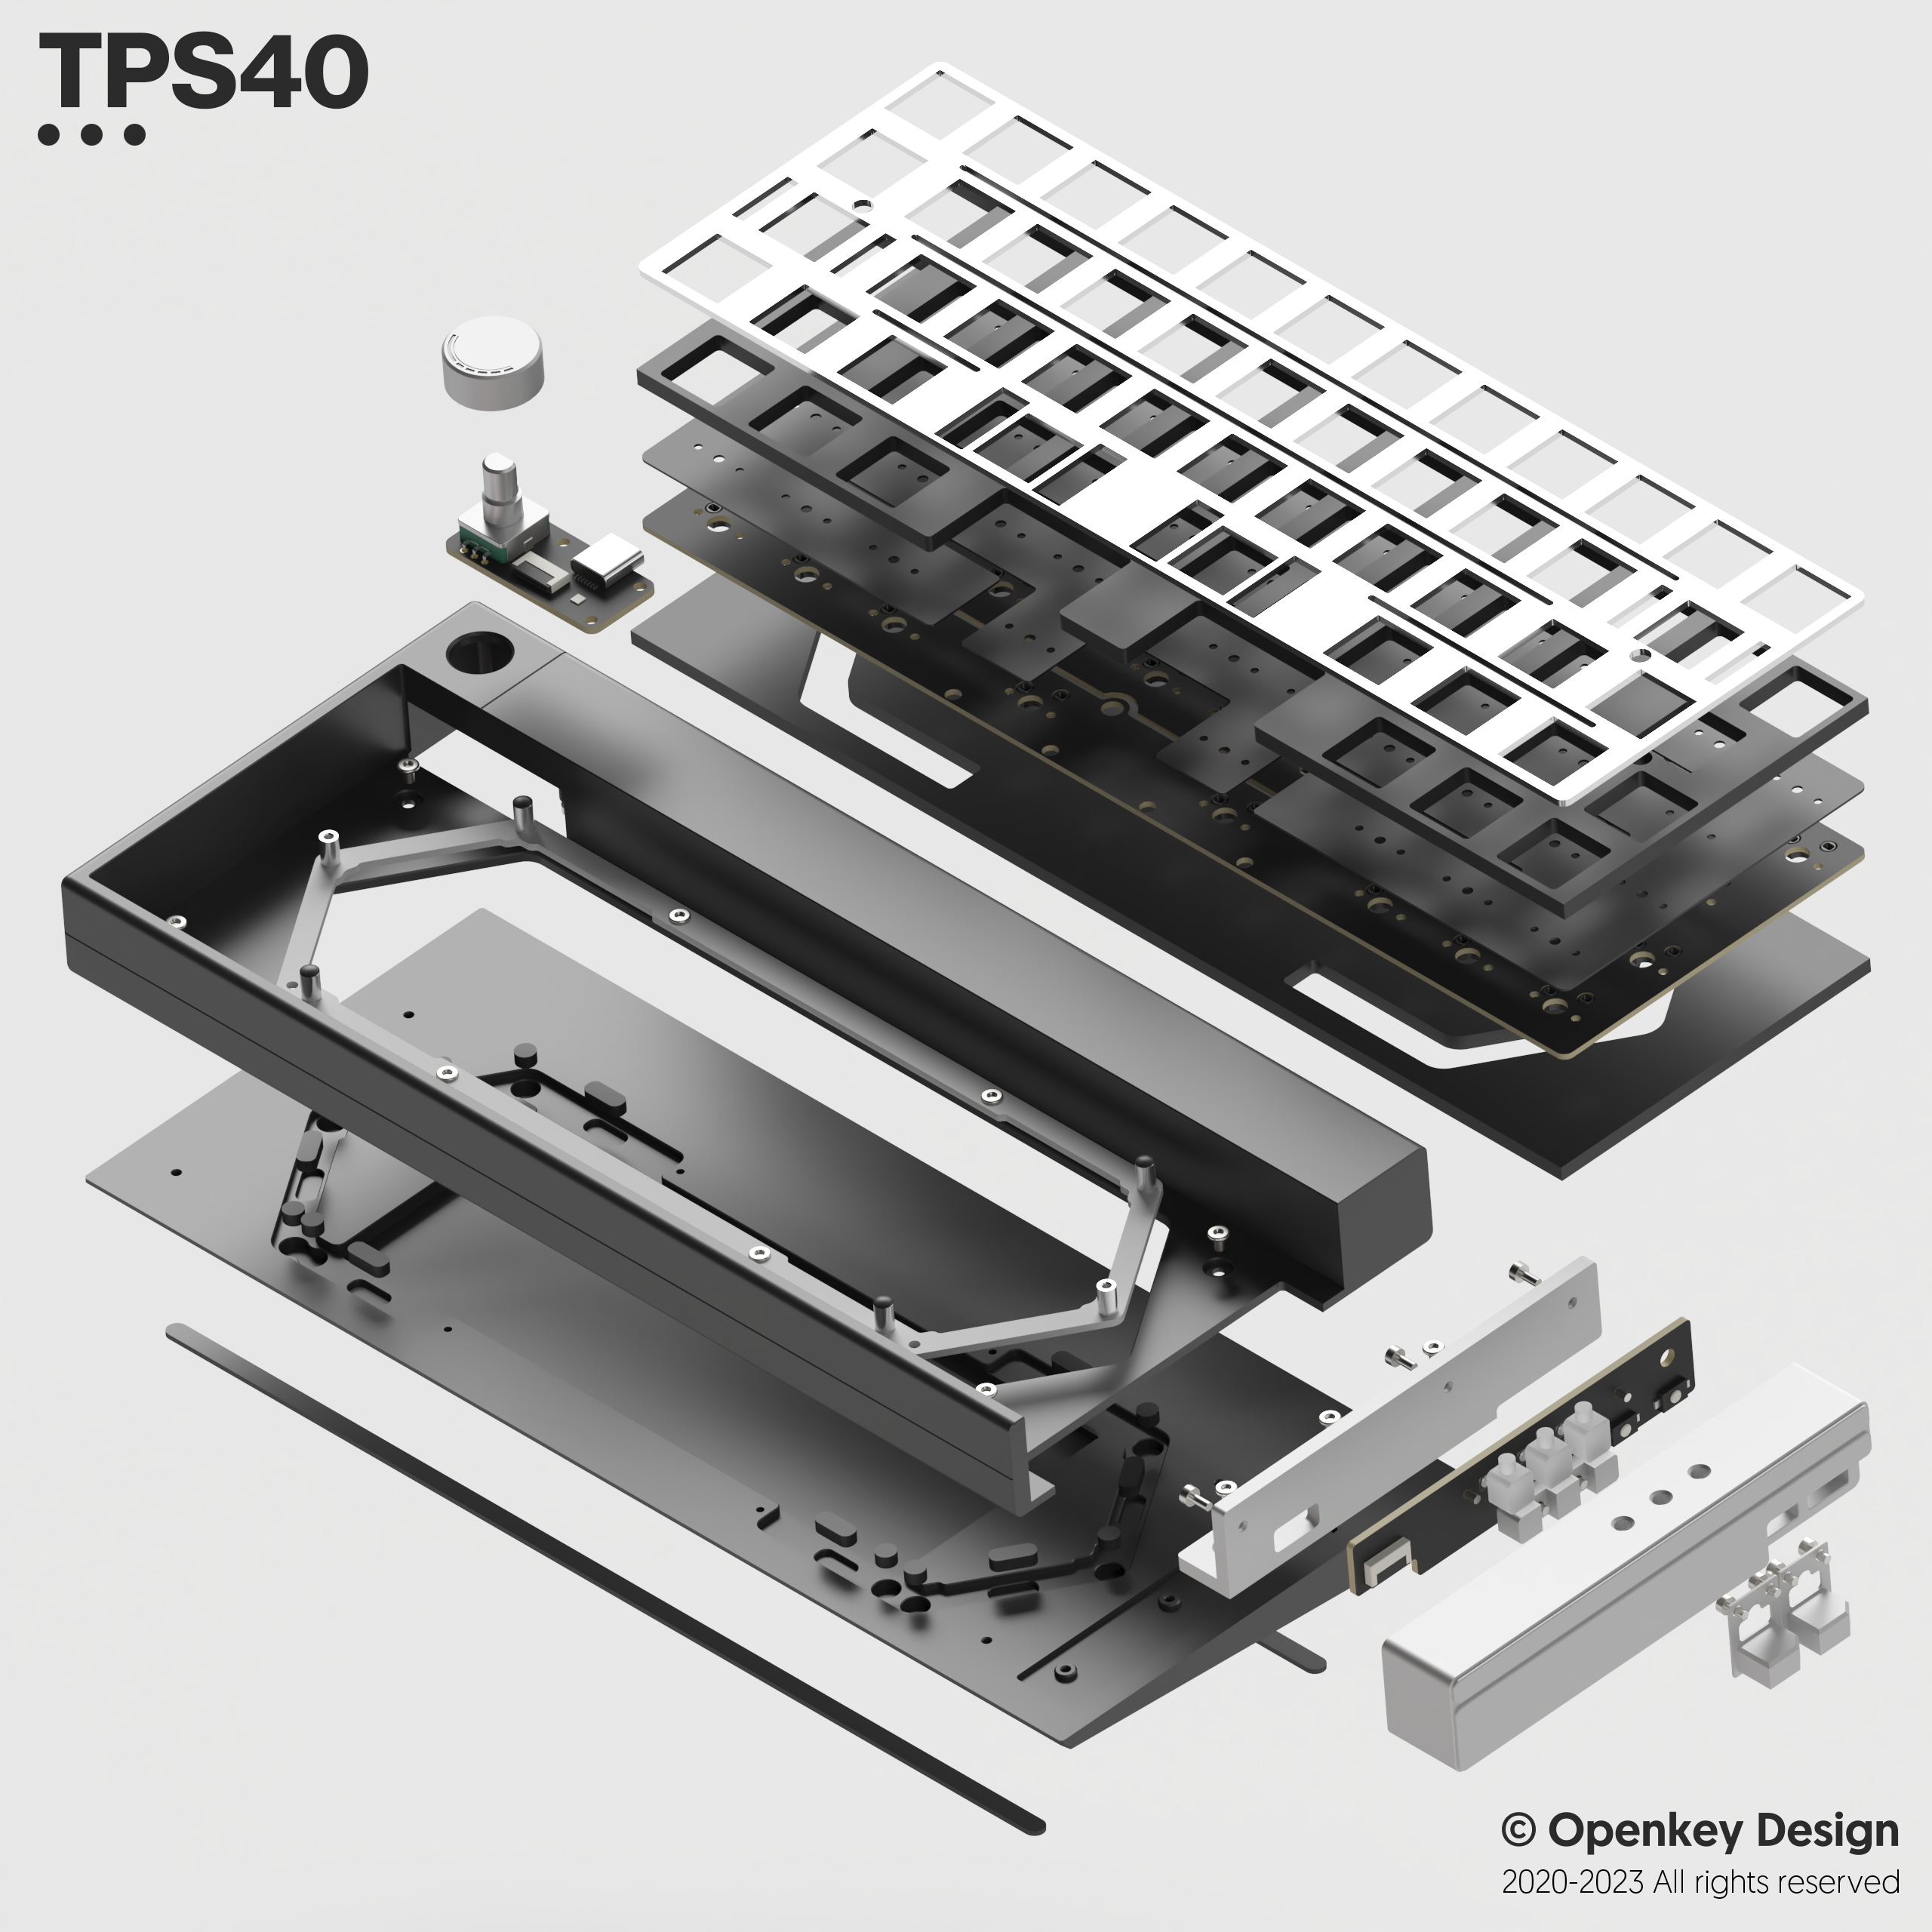 TPS40 by Deadline Studio x Openkey Design - KeebsForAll